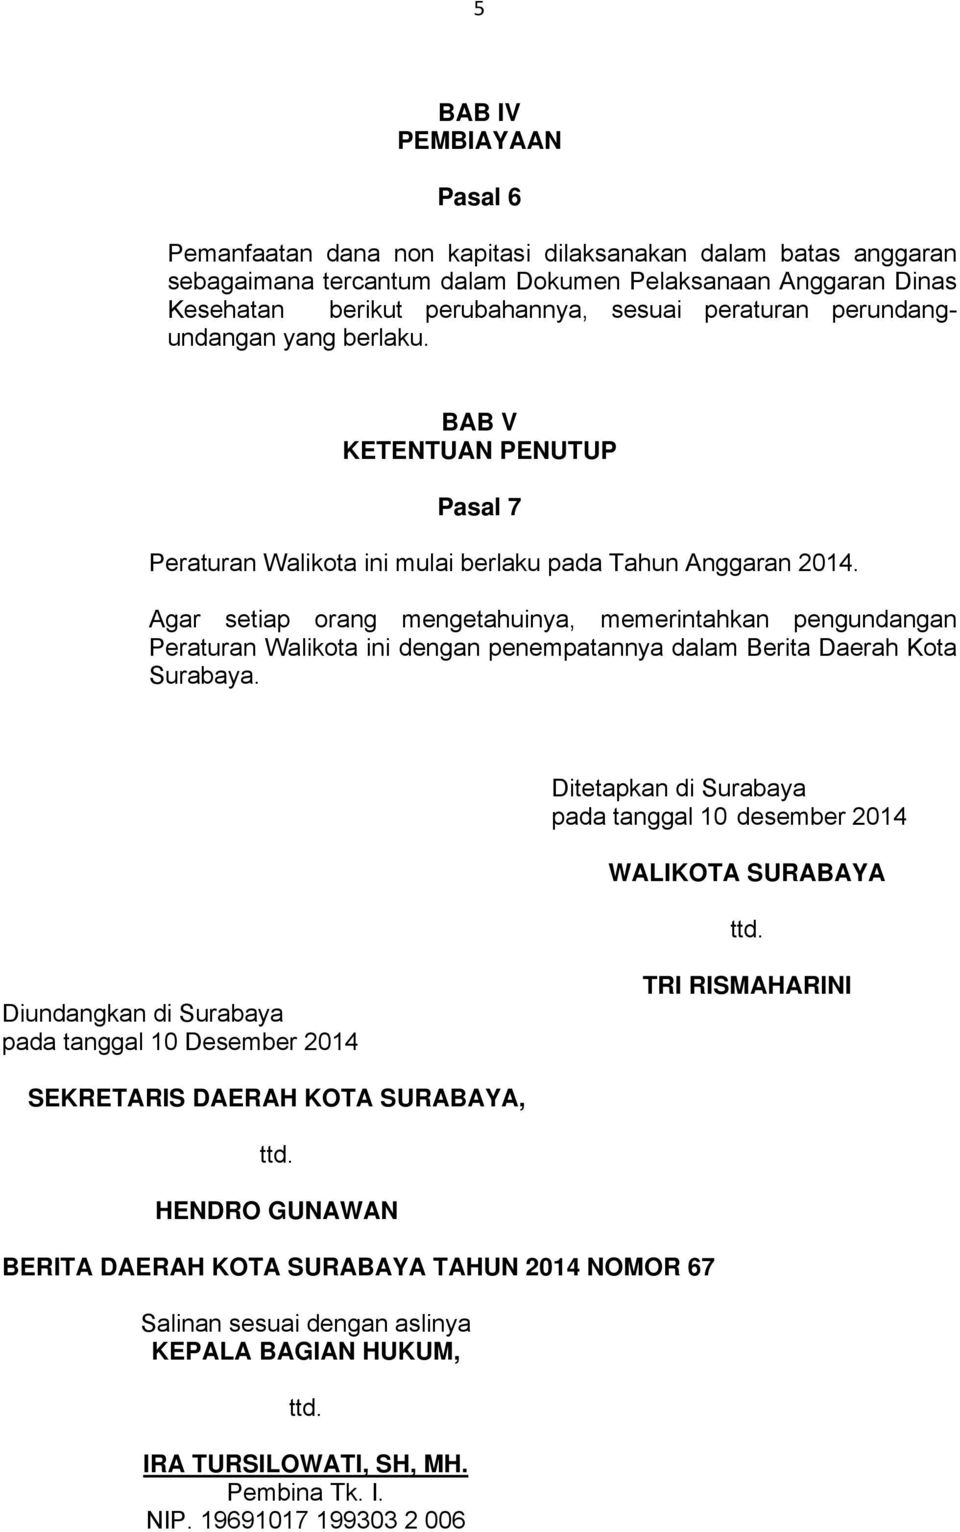 Agar setiap orang mengetahuinya, memerintahkan pengundangan Peraturan Walikota ini dengan penempatannya dalam Berita Daerah Kota Surabaya.